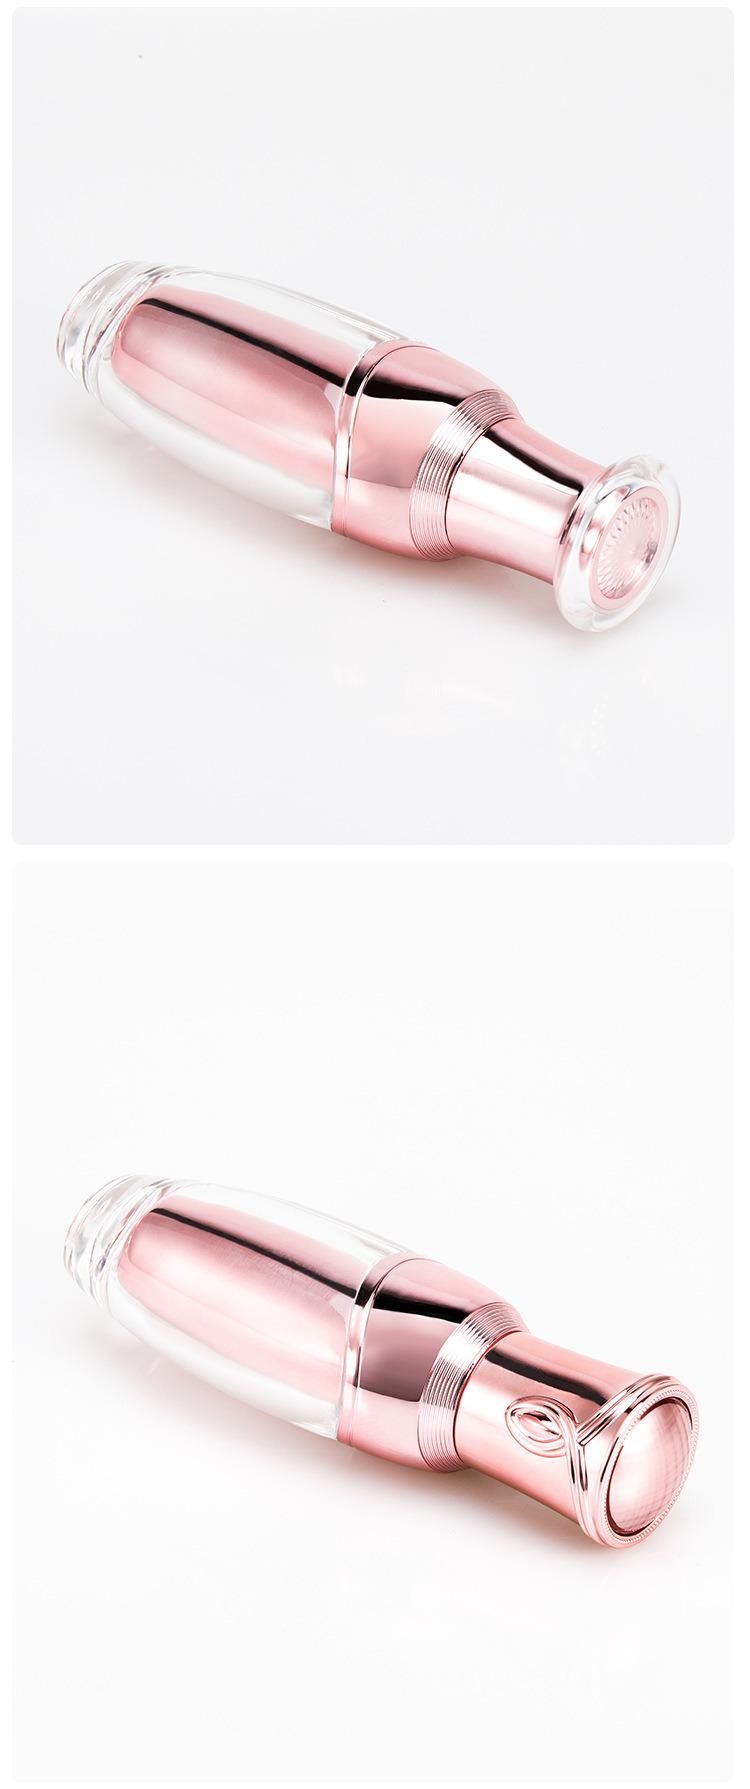 50ml Hot Sale Double Wall Pink Acrylic Lotion Bottle